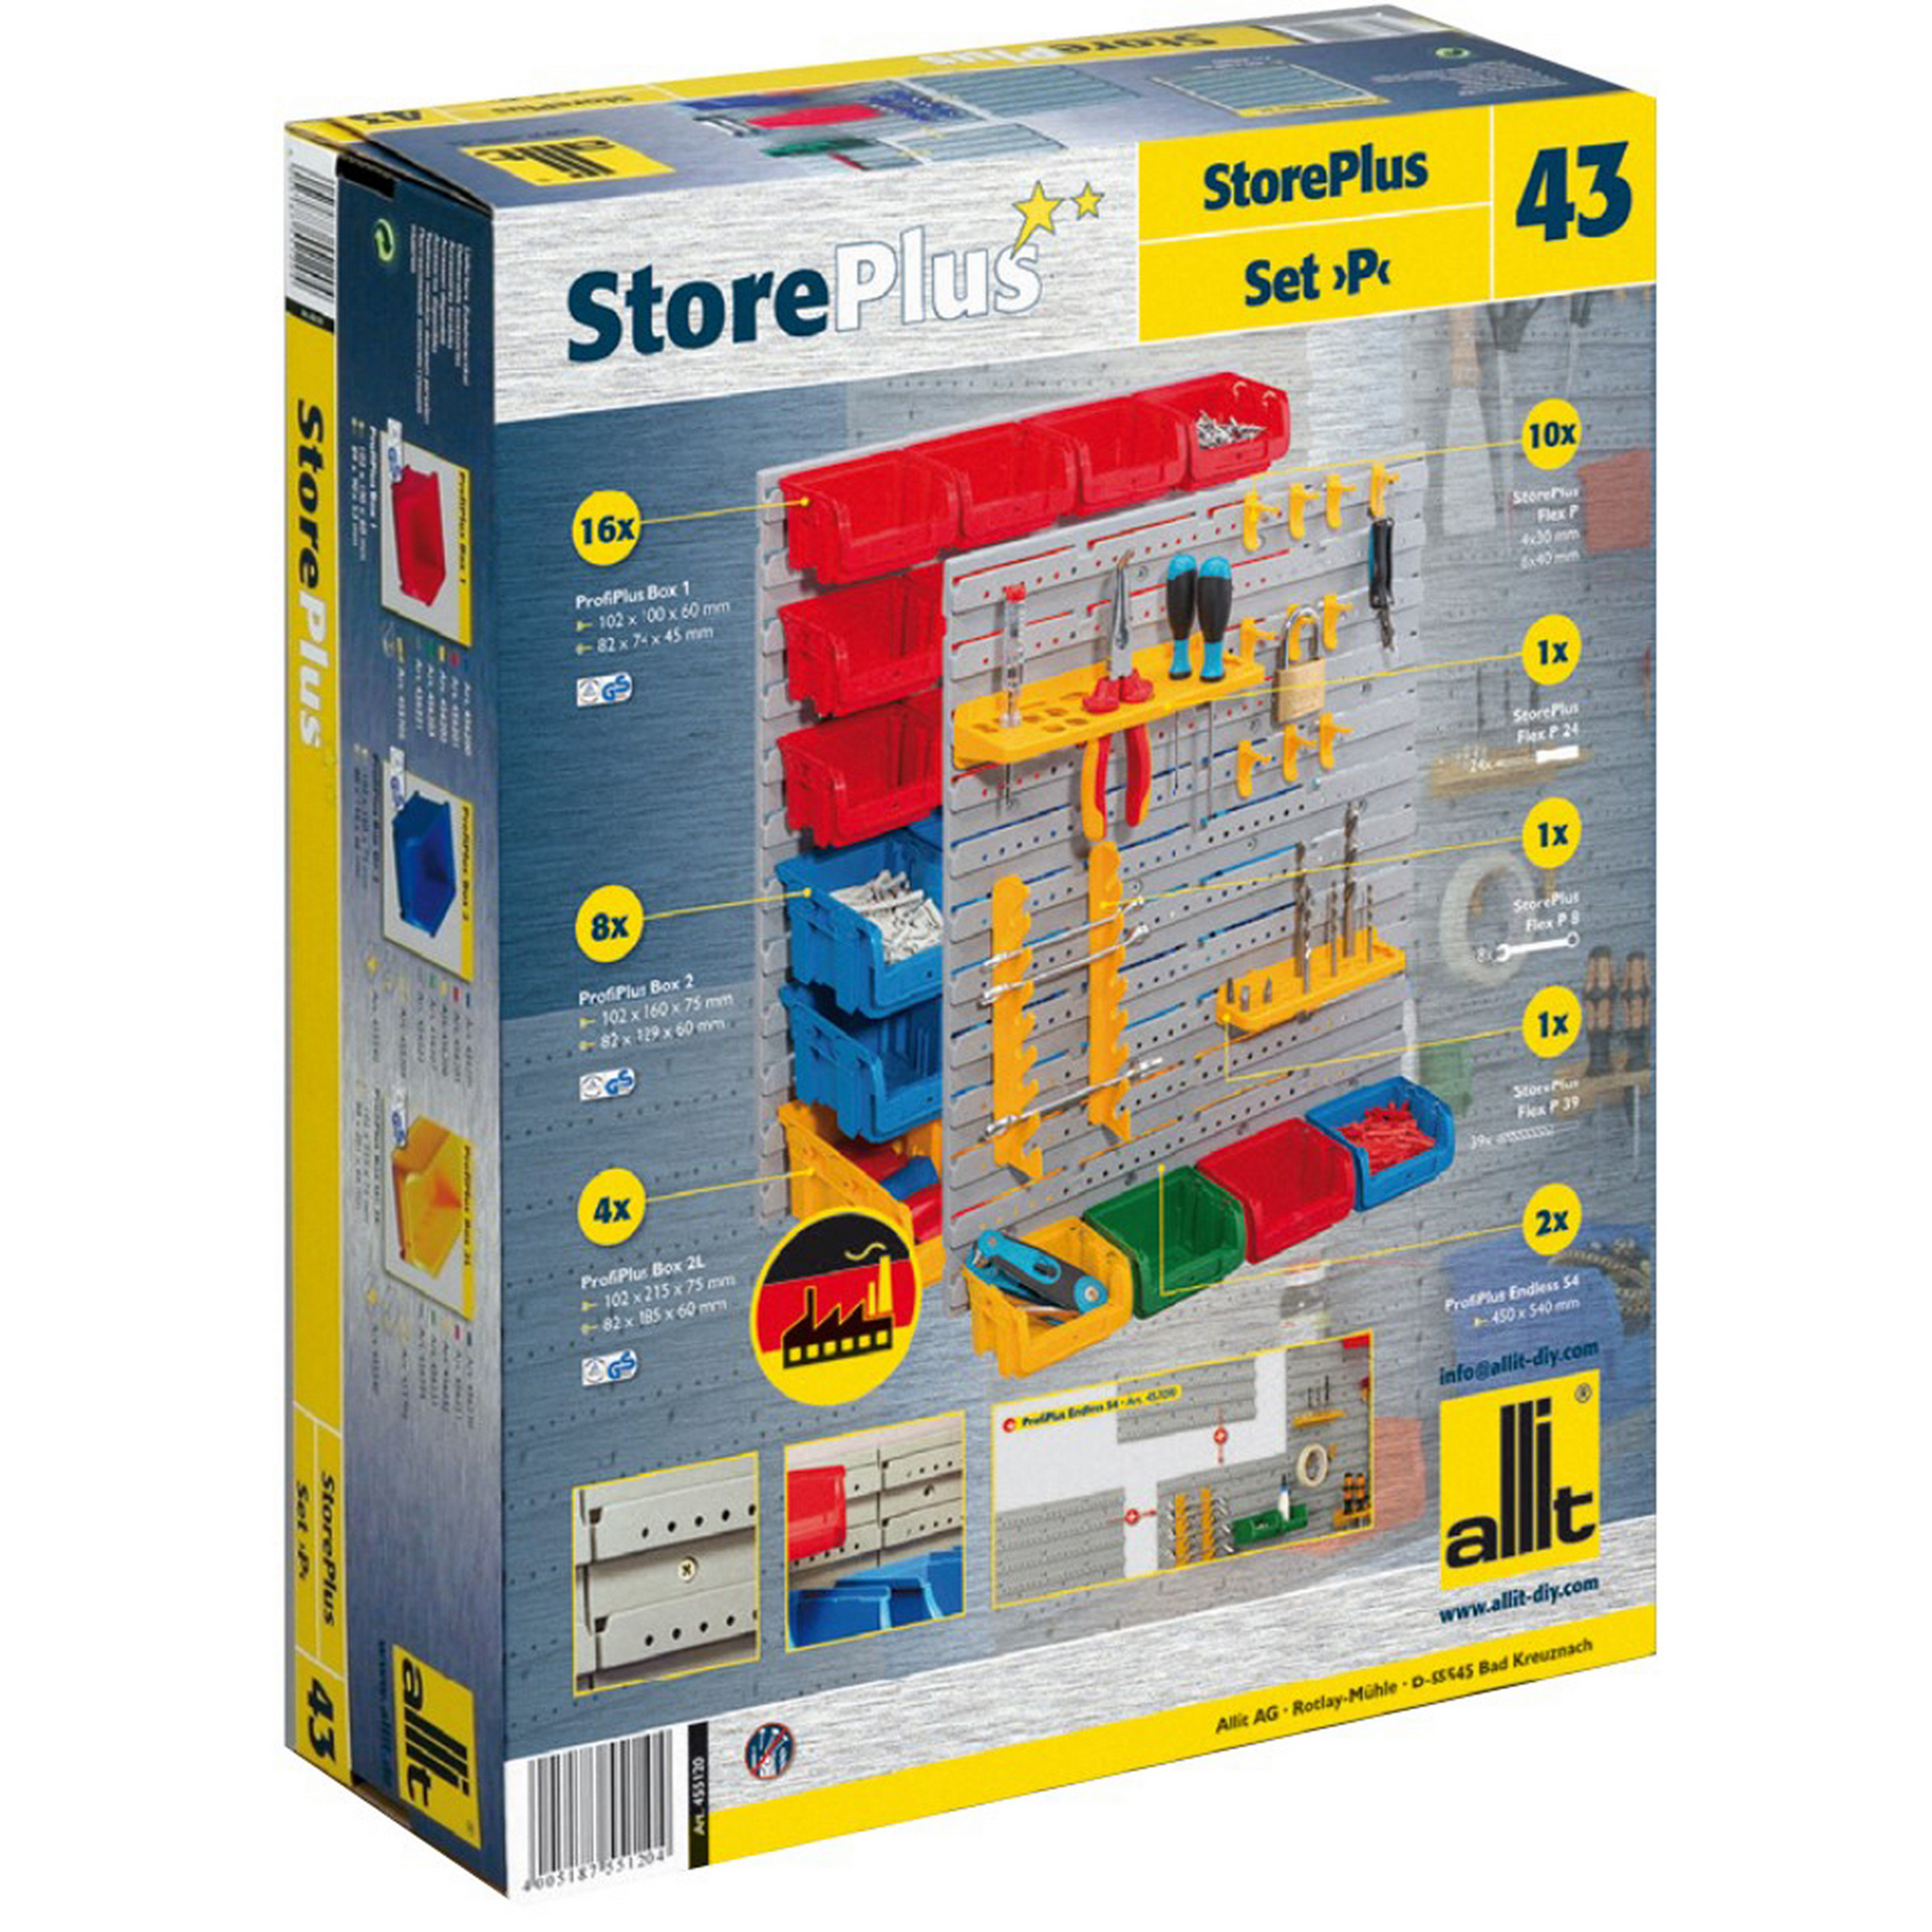 StorePlus Wandsystem 'Set P 43' mit 2 x Endloswand + product picture